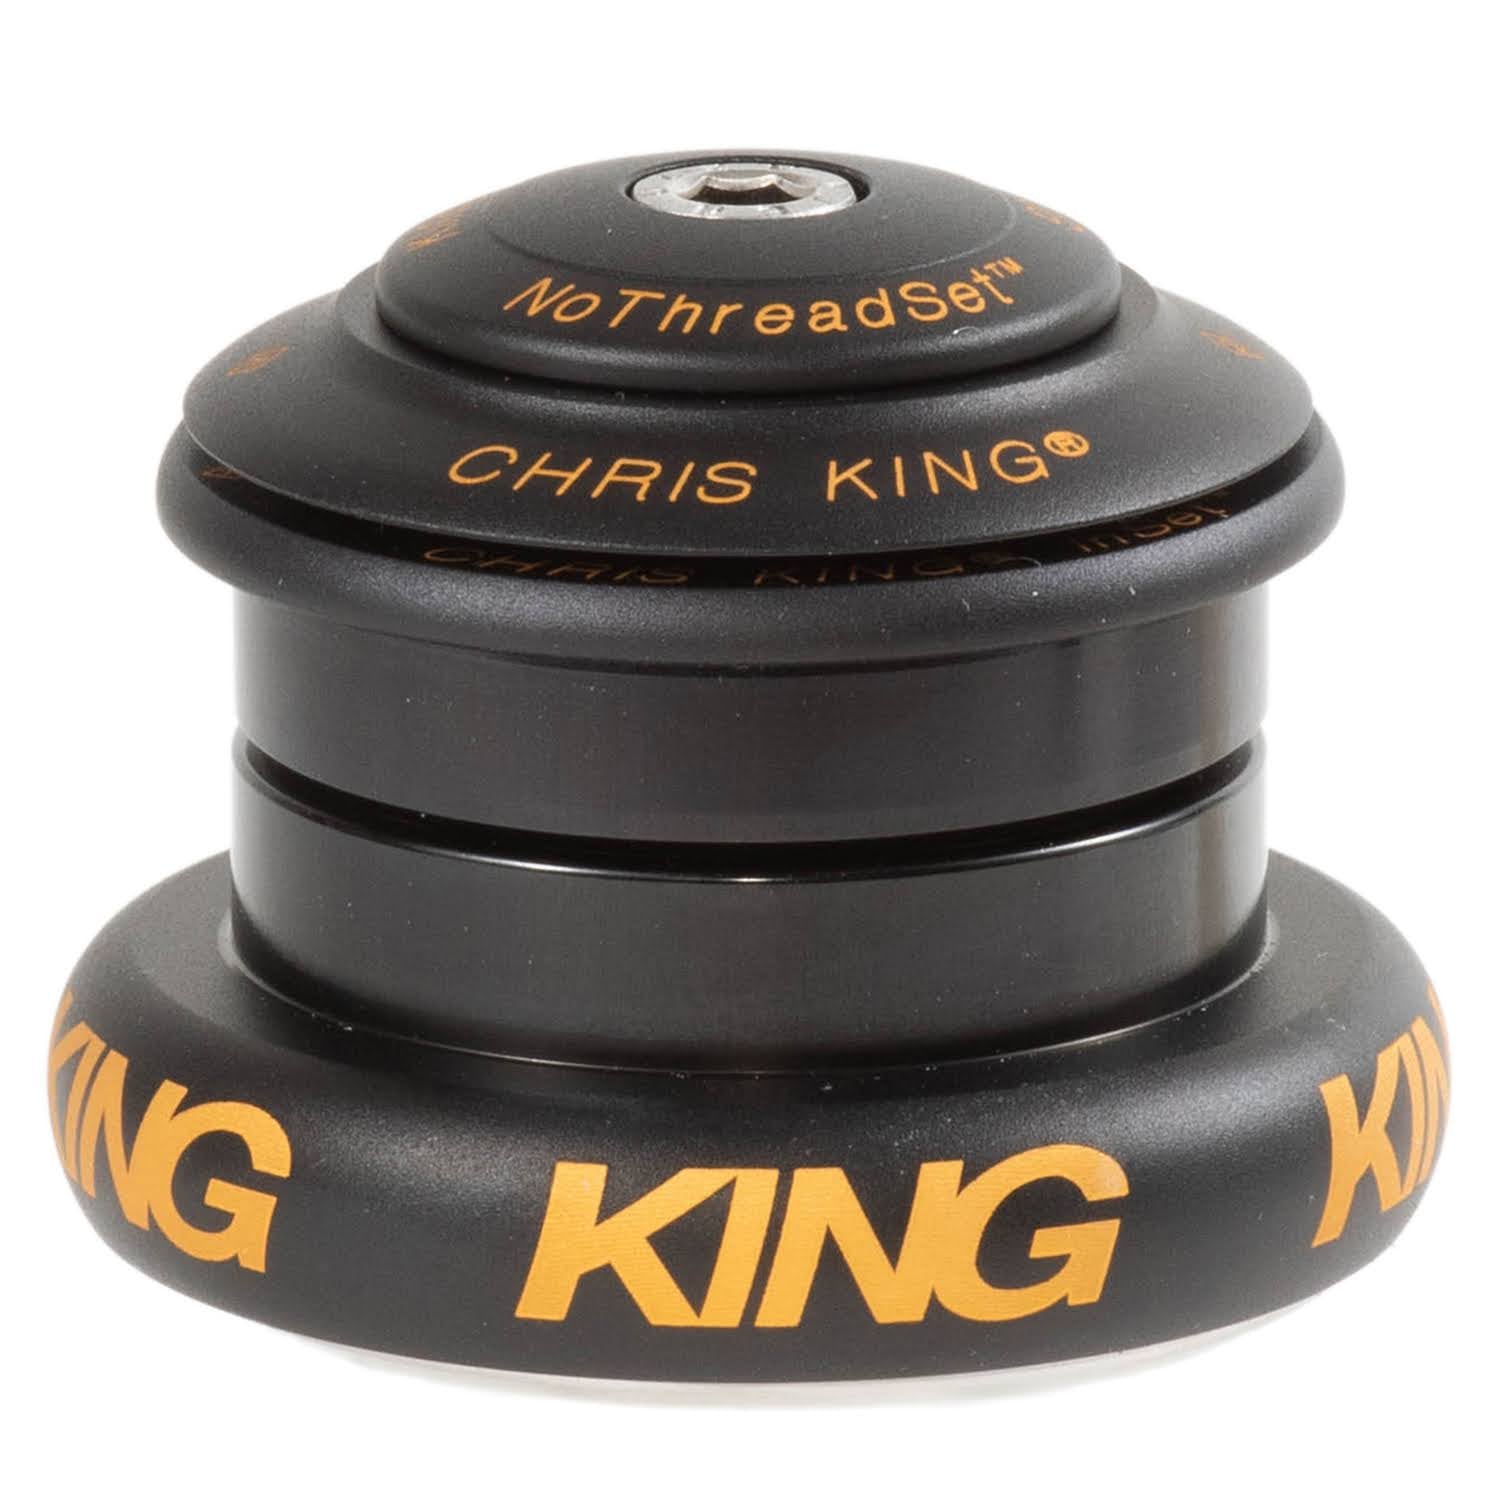 CHRIS KING InSet Two Tone Black Gold